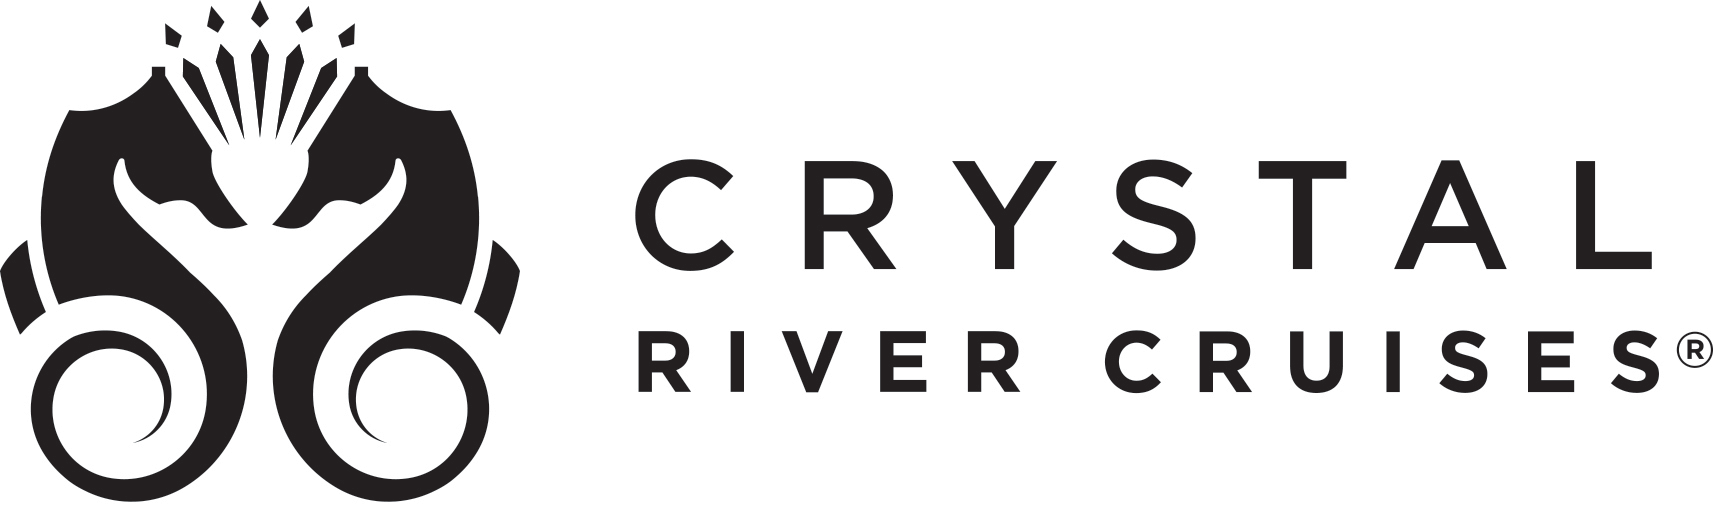 (c) Crystal River Cruises